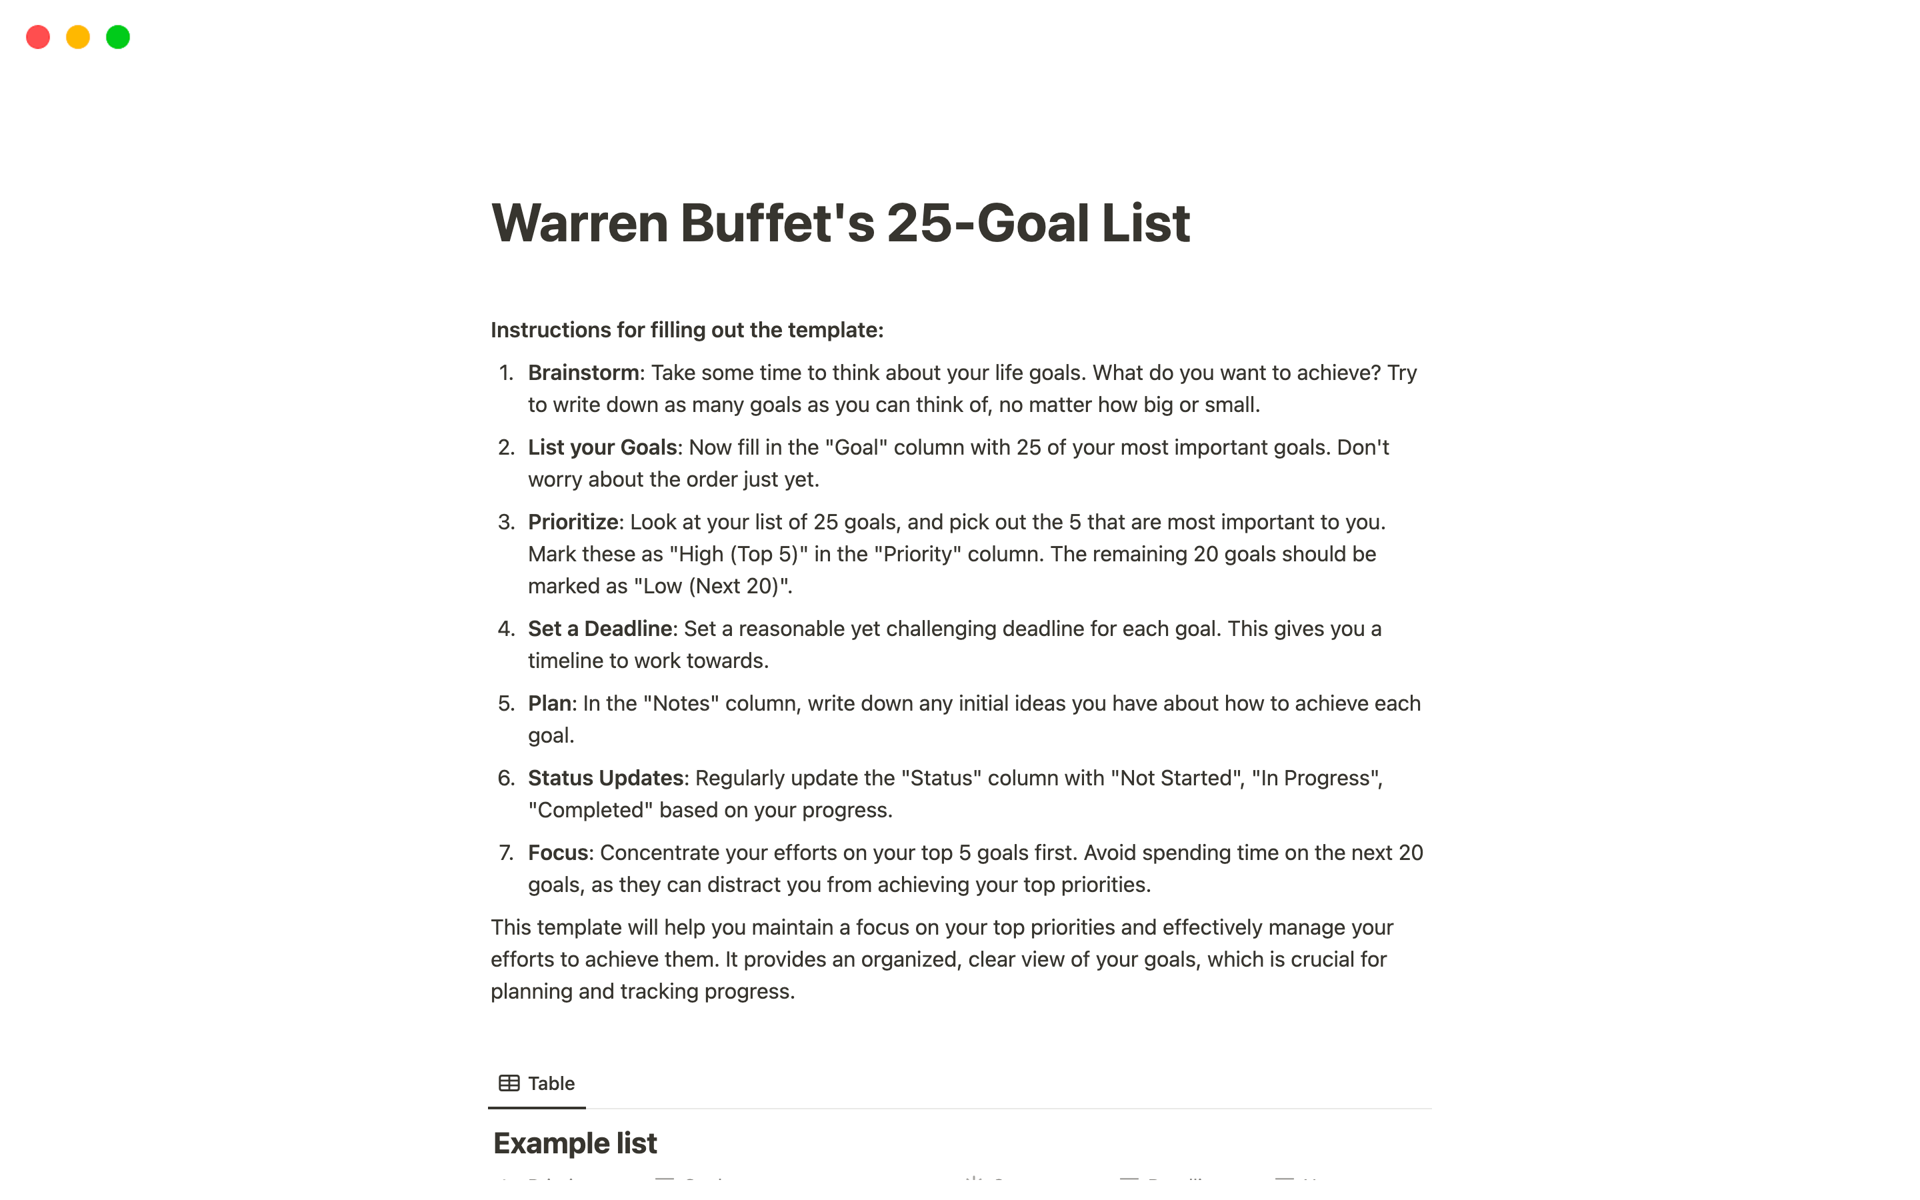 Warren Buffet's 25-Goal List님의 템플릿 미리보기